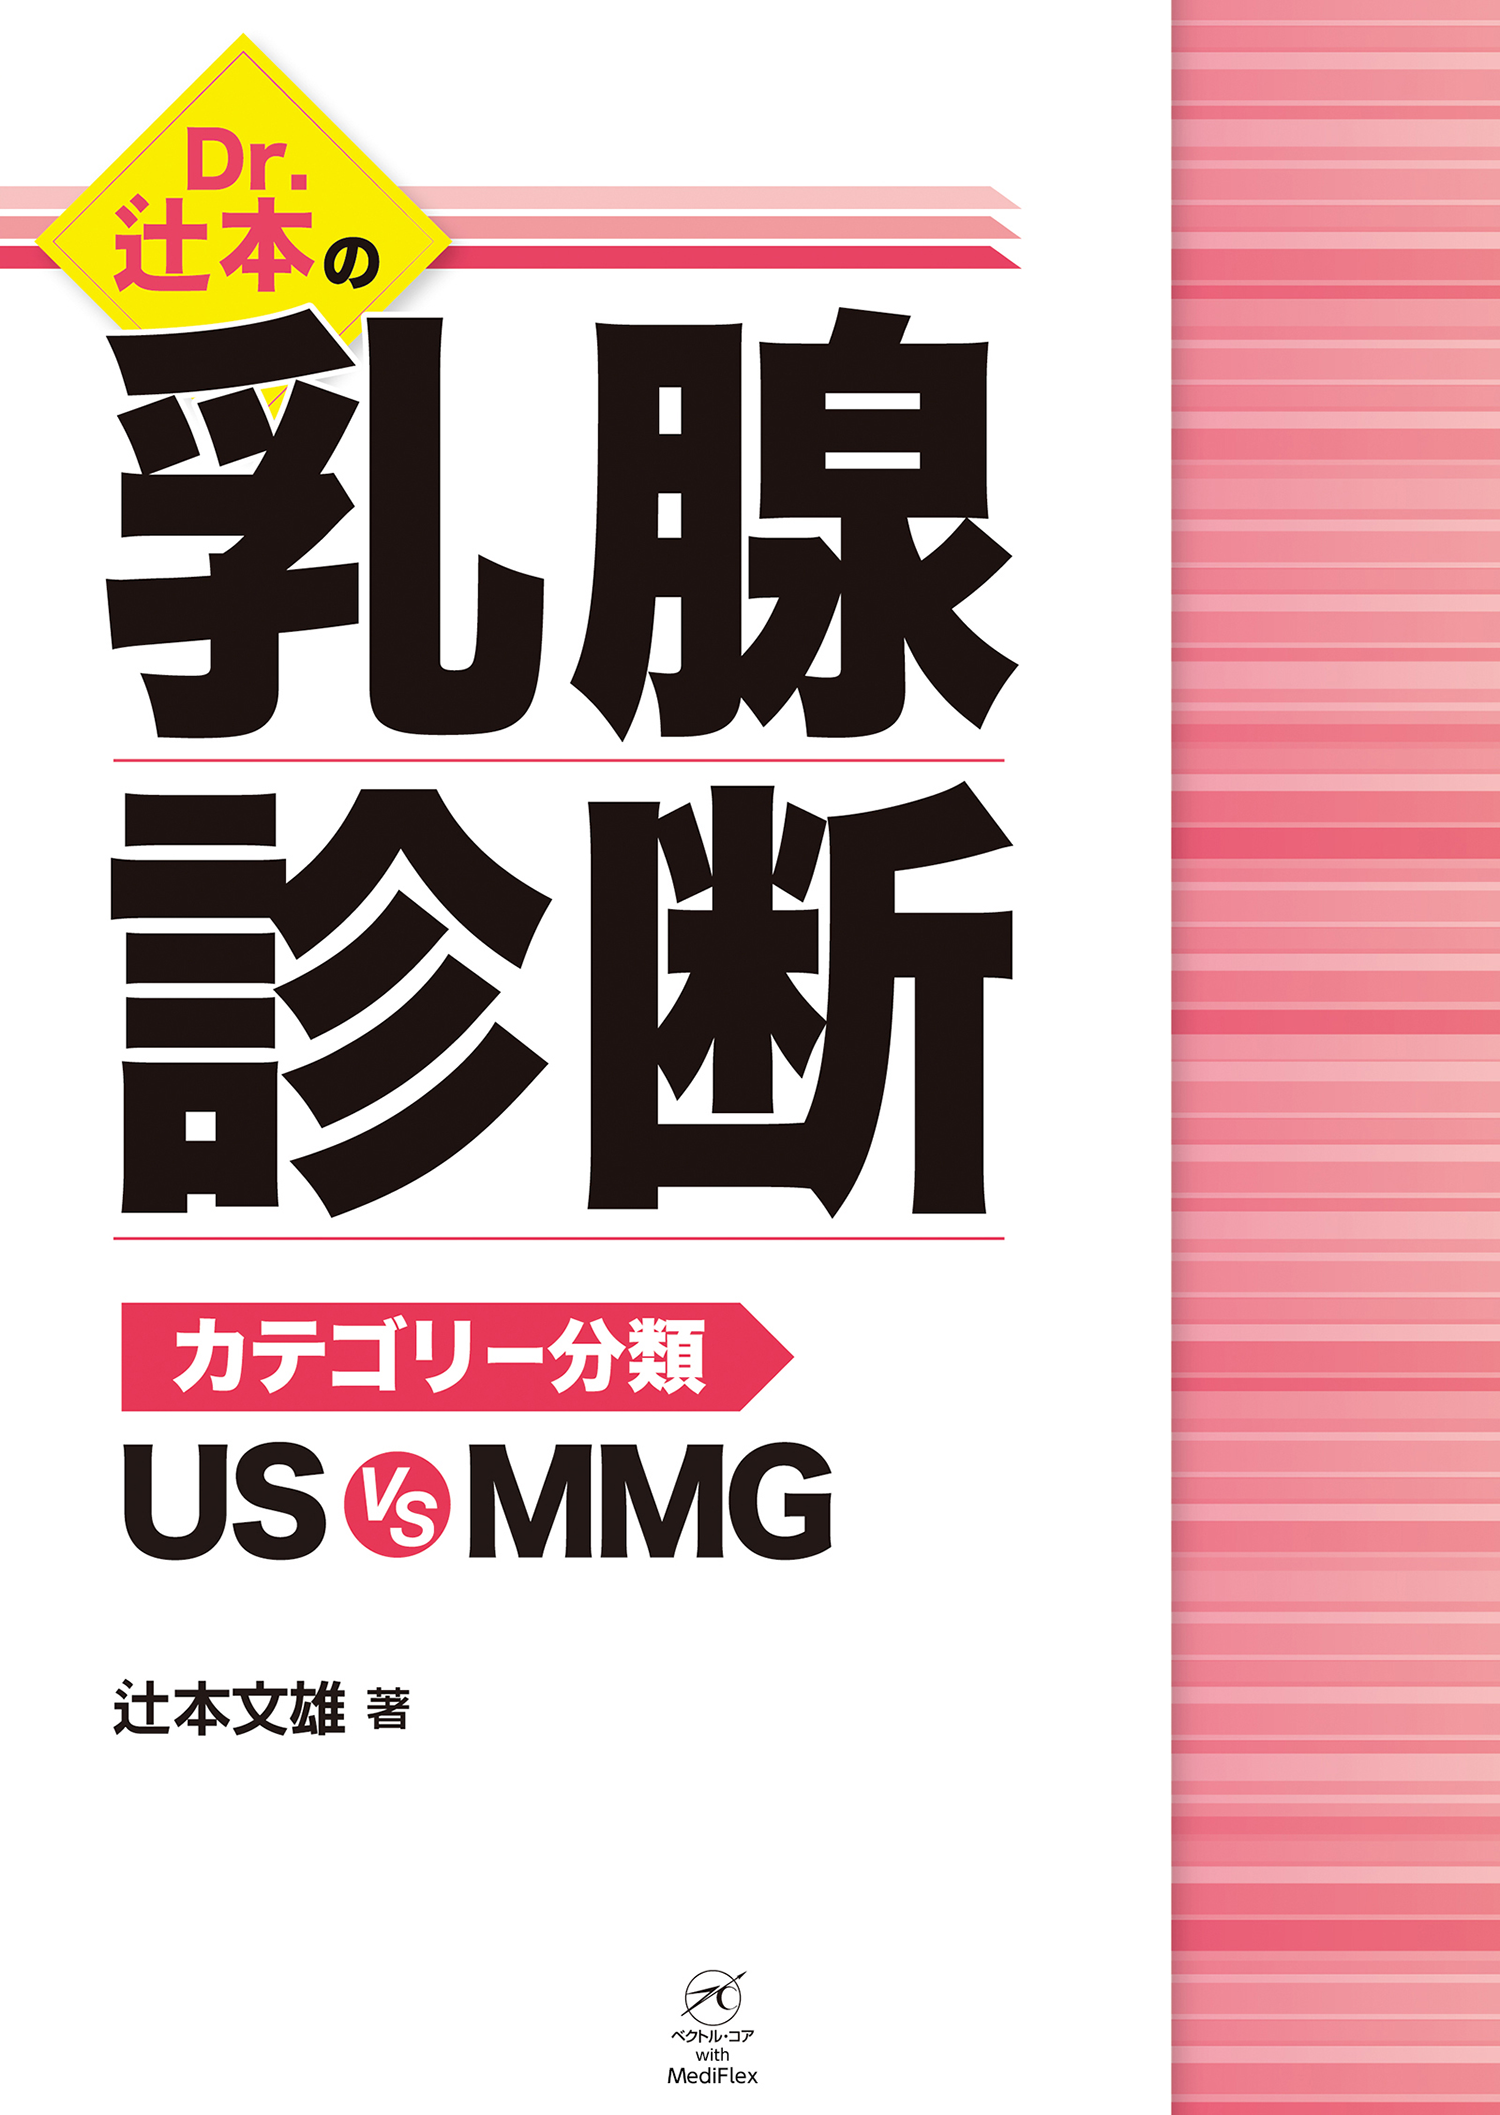 Dr. 辻本の乳腺診断〜カテゴリー分類 US vs MMG〜